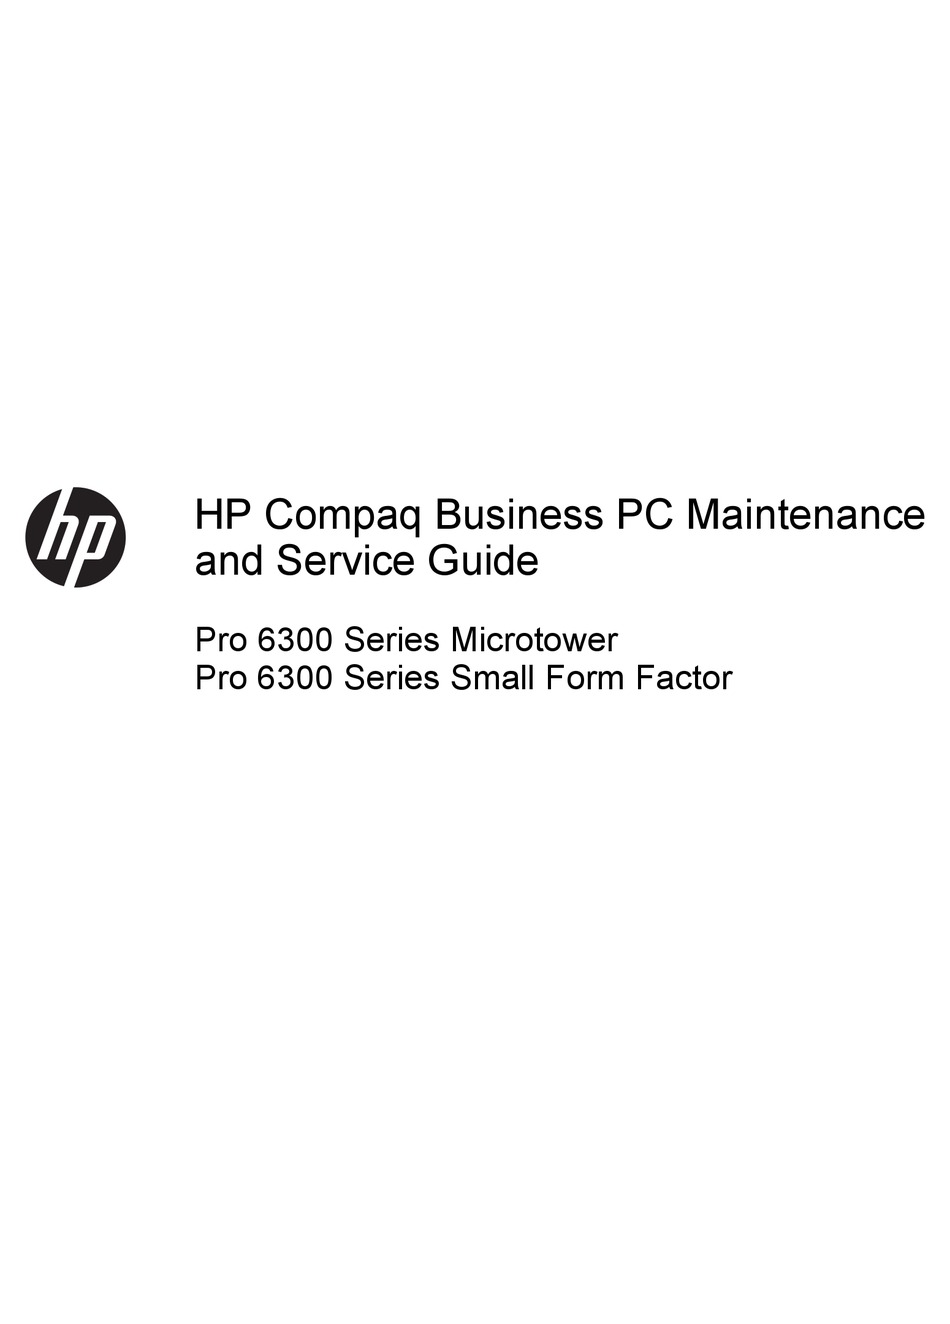 Hp Compaq Pro 6300 Series Microtower Maintenance And Service Manual Pdf Download Manualslib